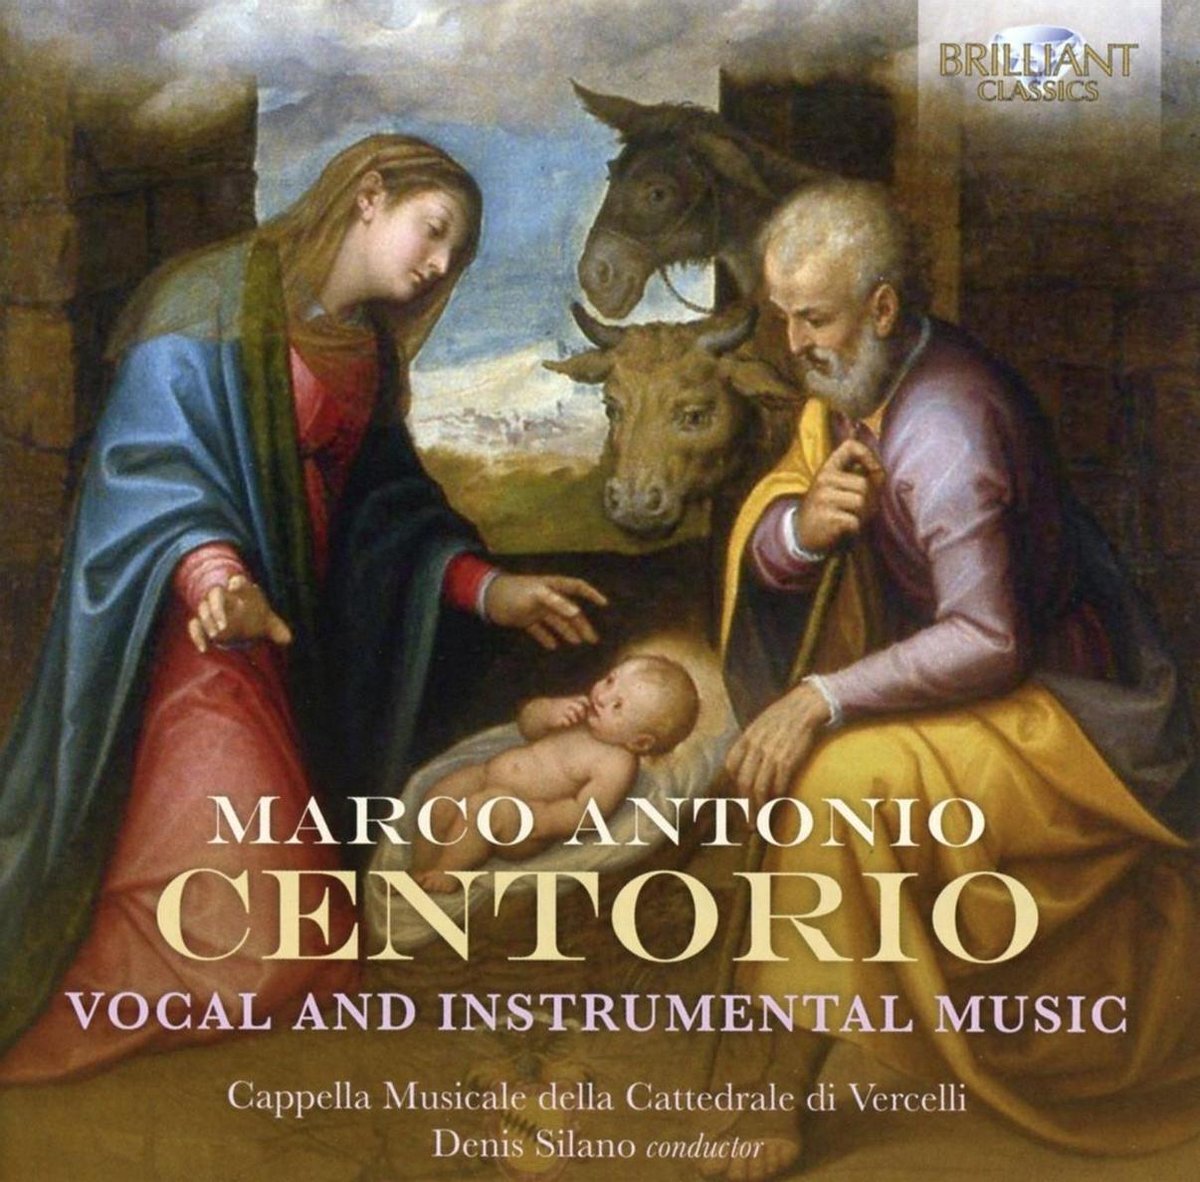 Brilliant Classics Centorio: Vocal And Instrumental Music